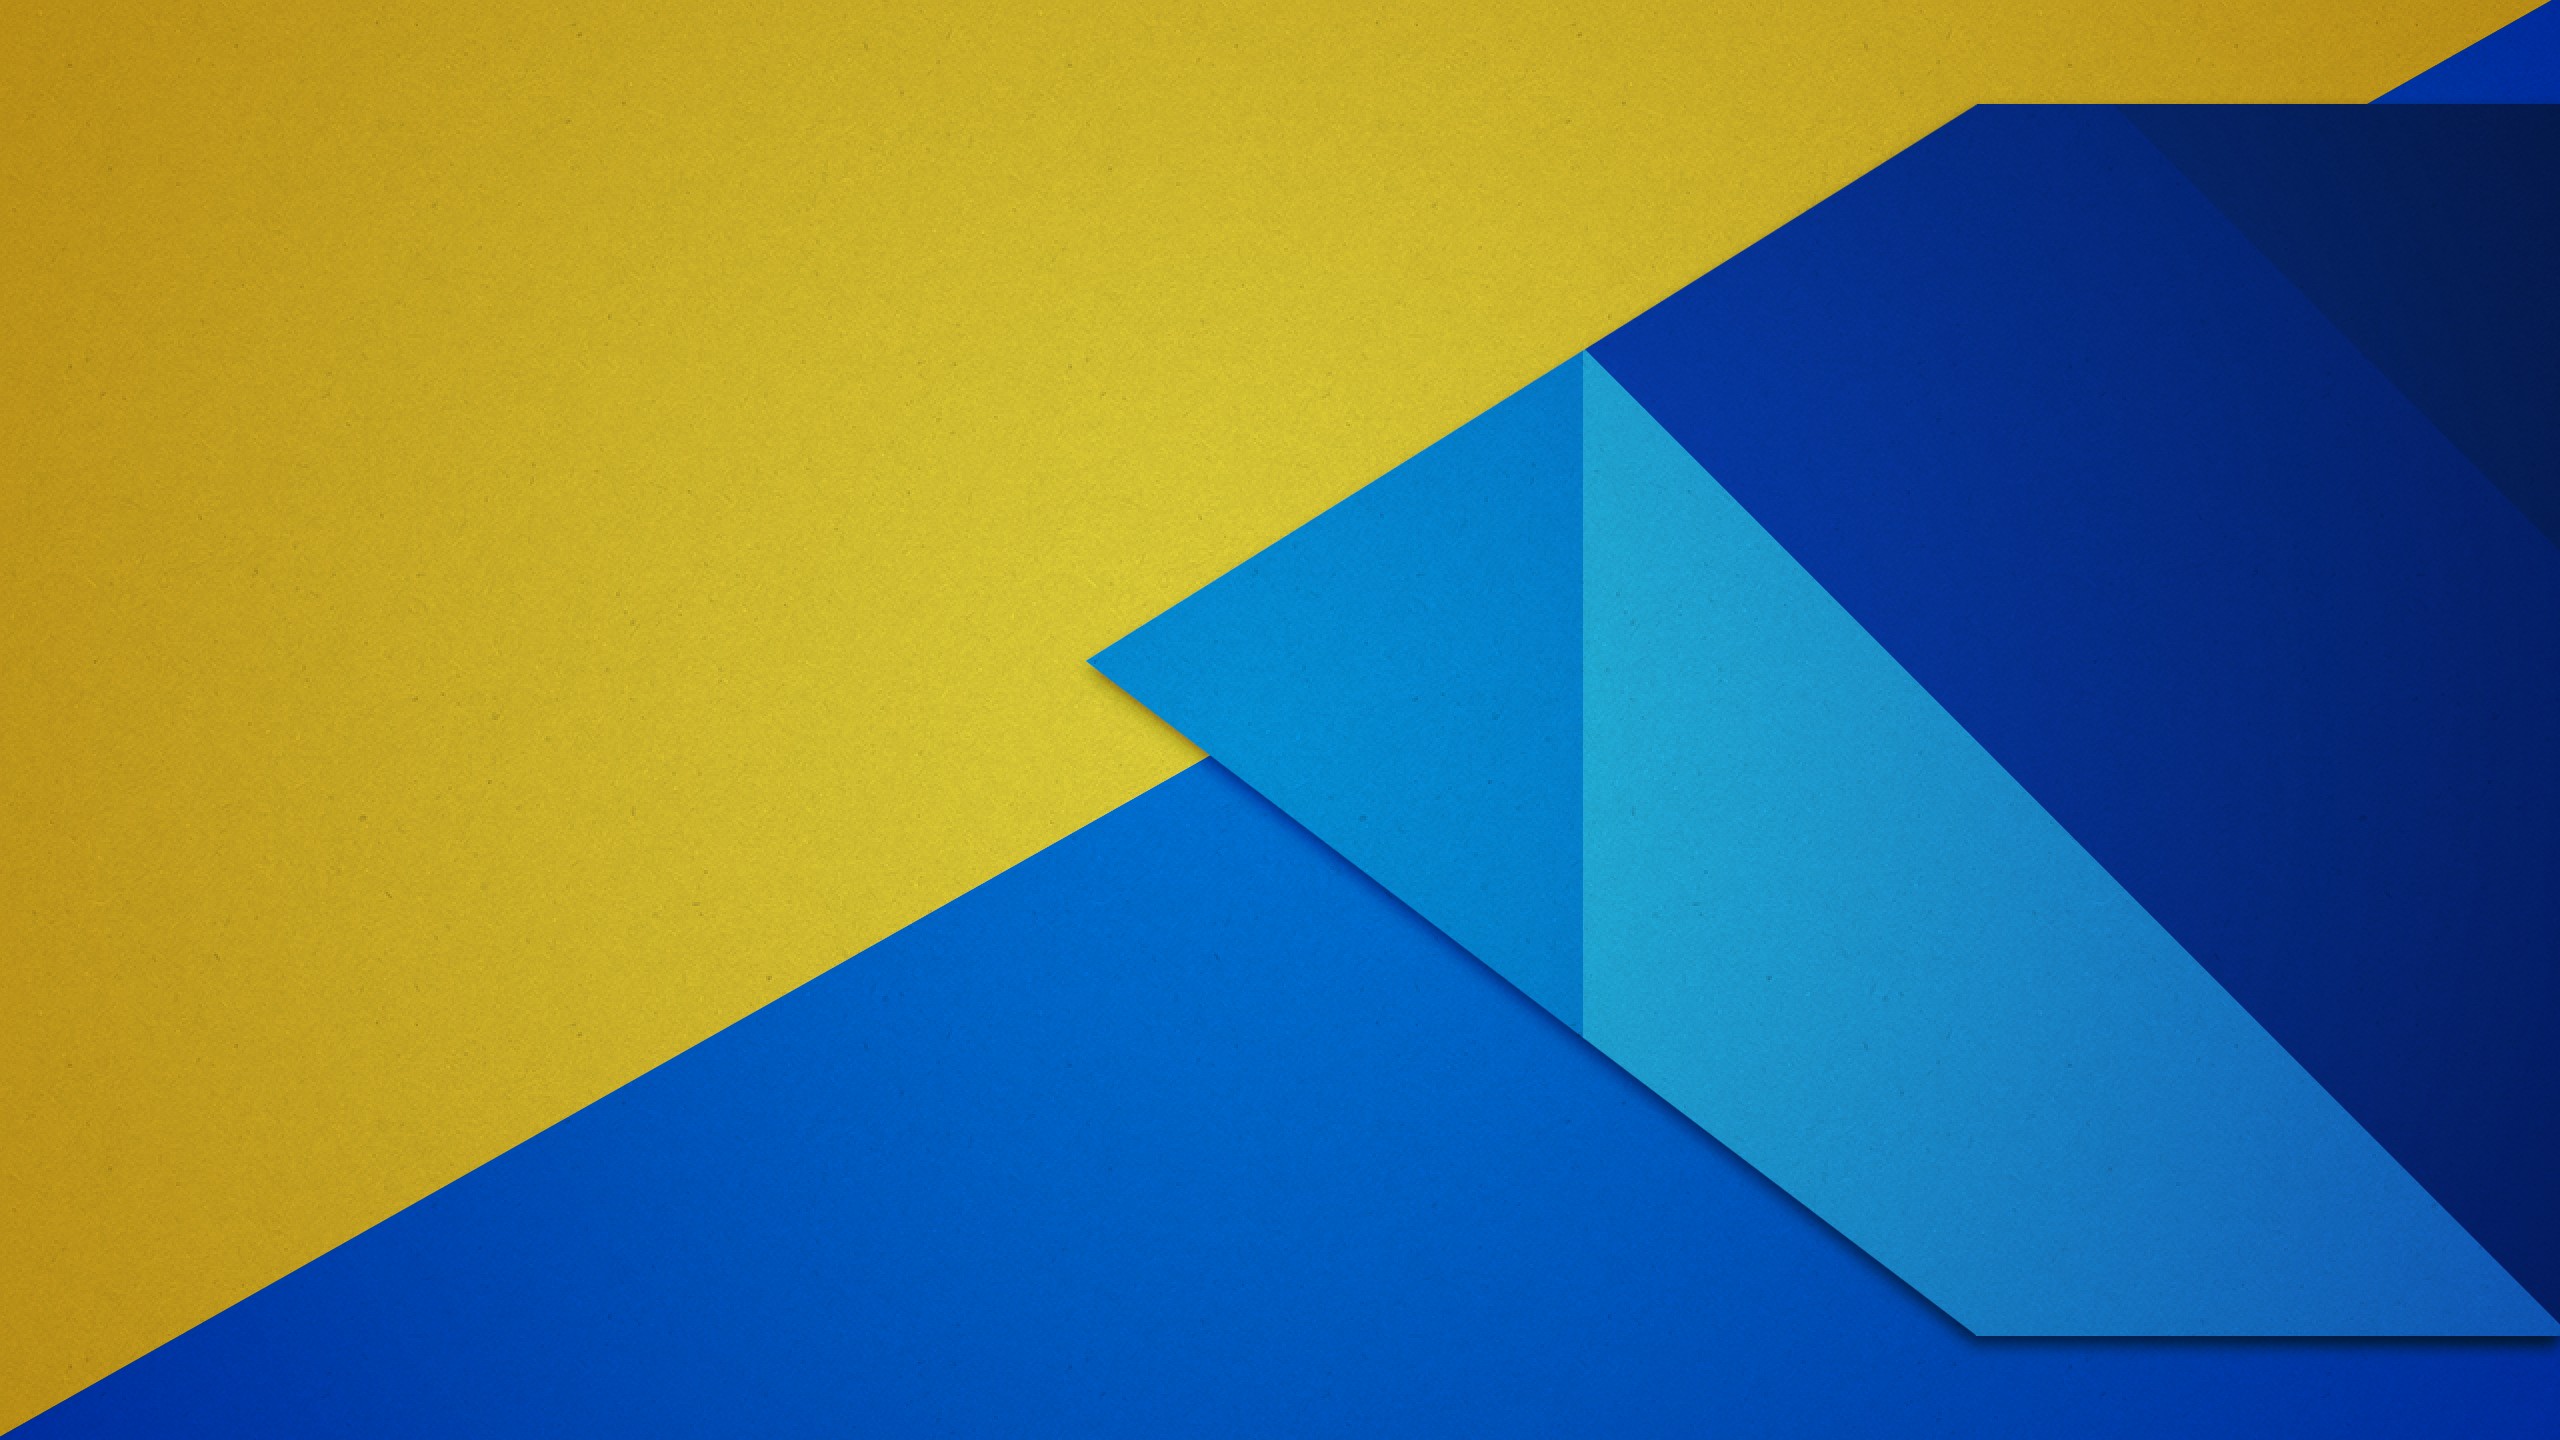 android marshmallow wallpaper 1080p,blu,giallo,blu cobalto,turchese,linea